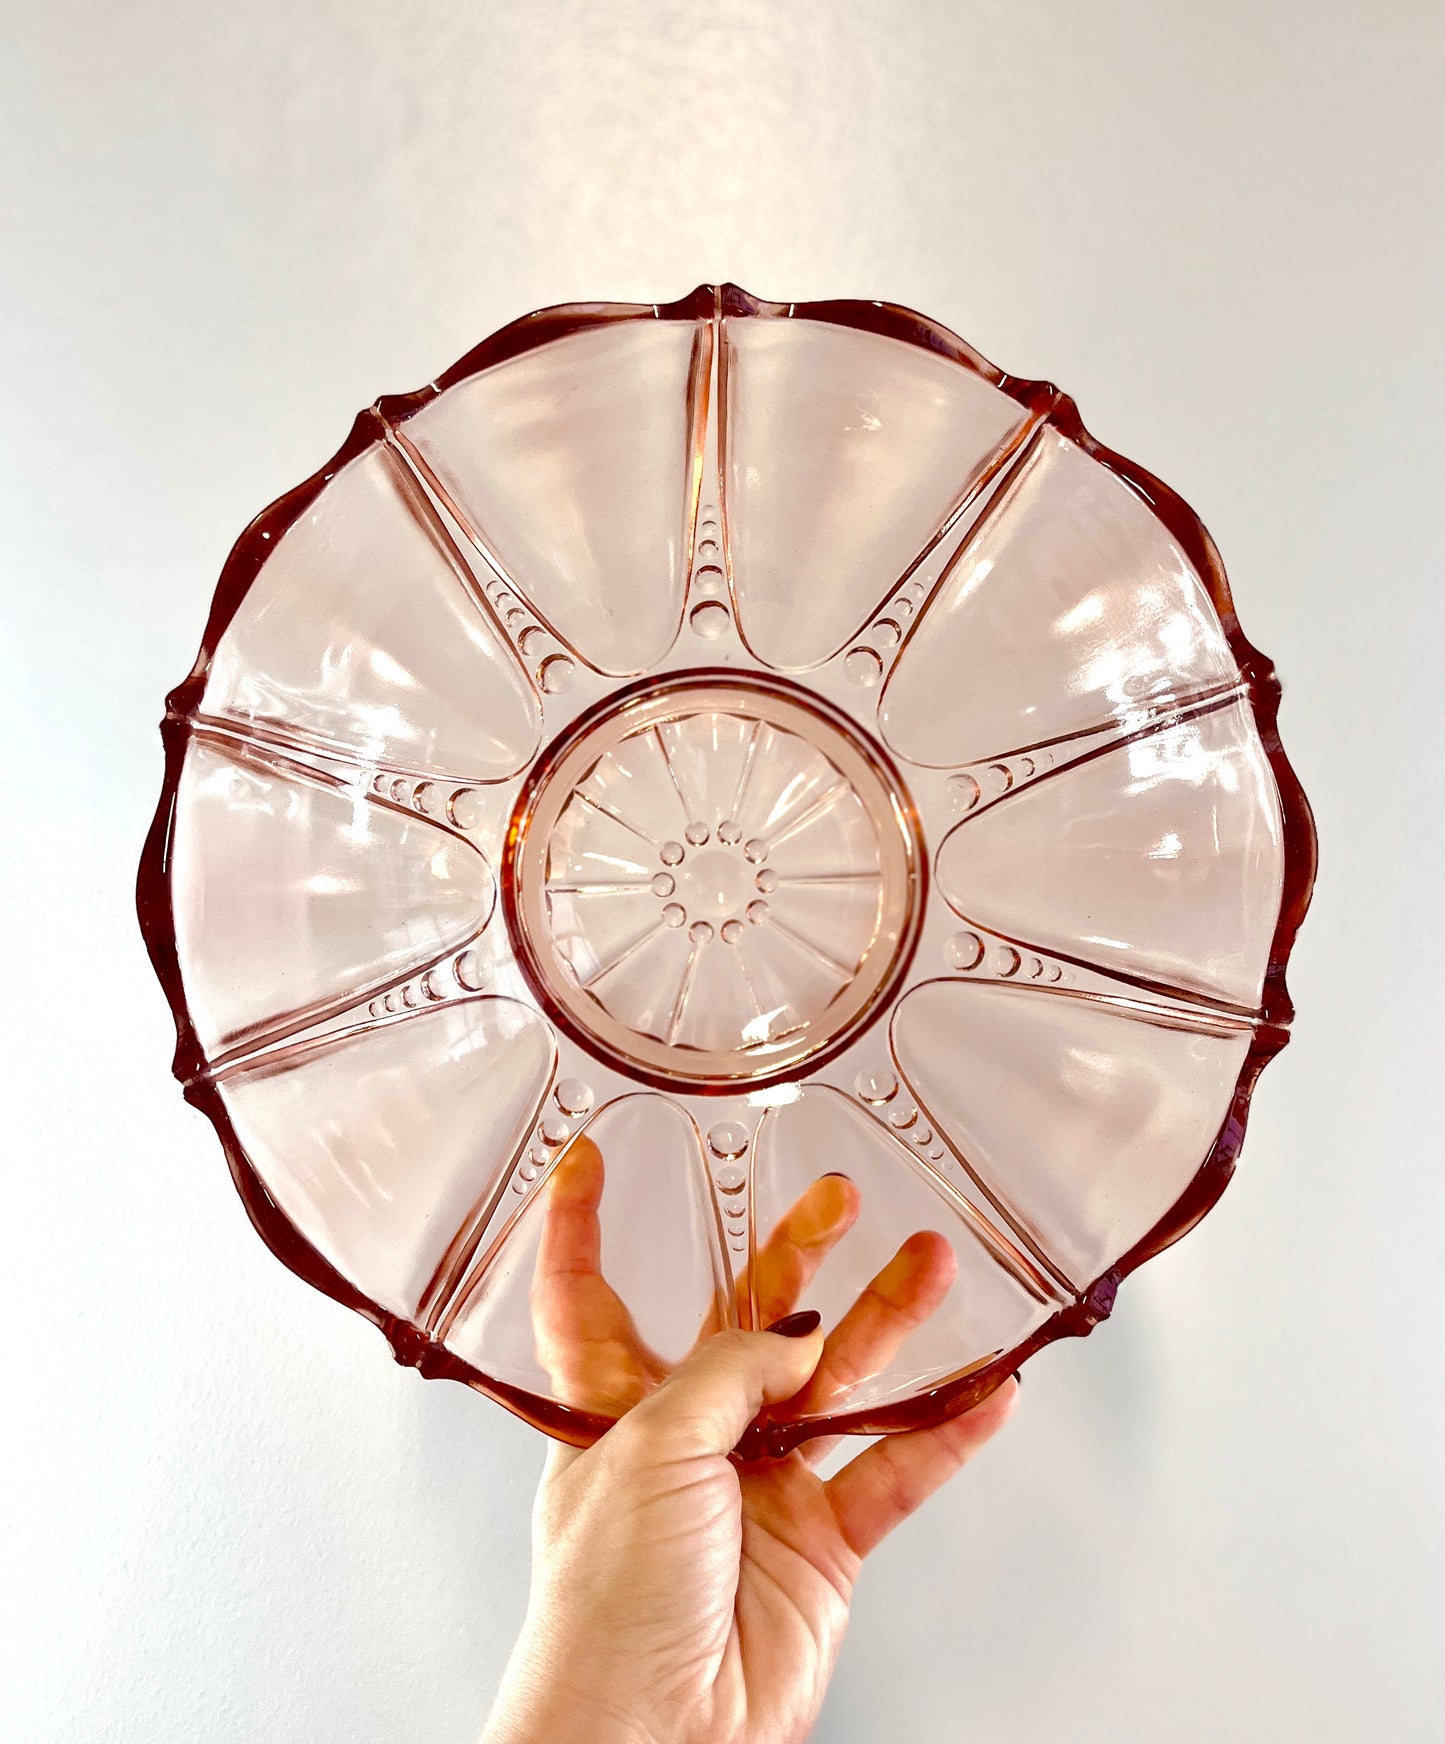 Pink Depression Glass Serving Bowl and Platter